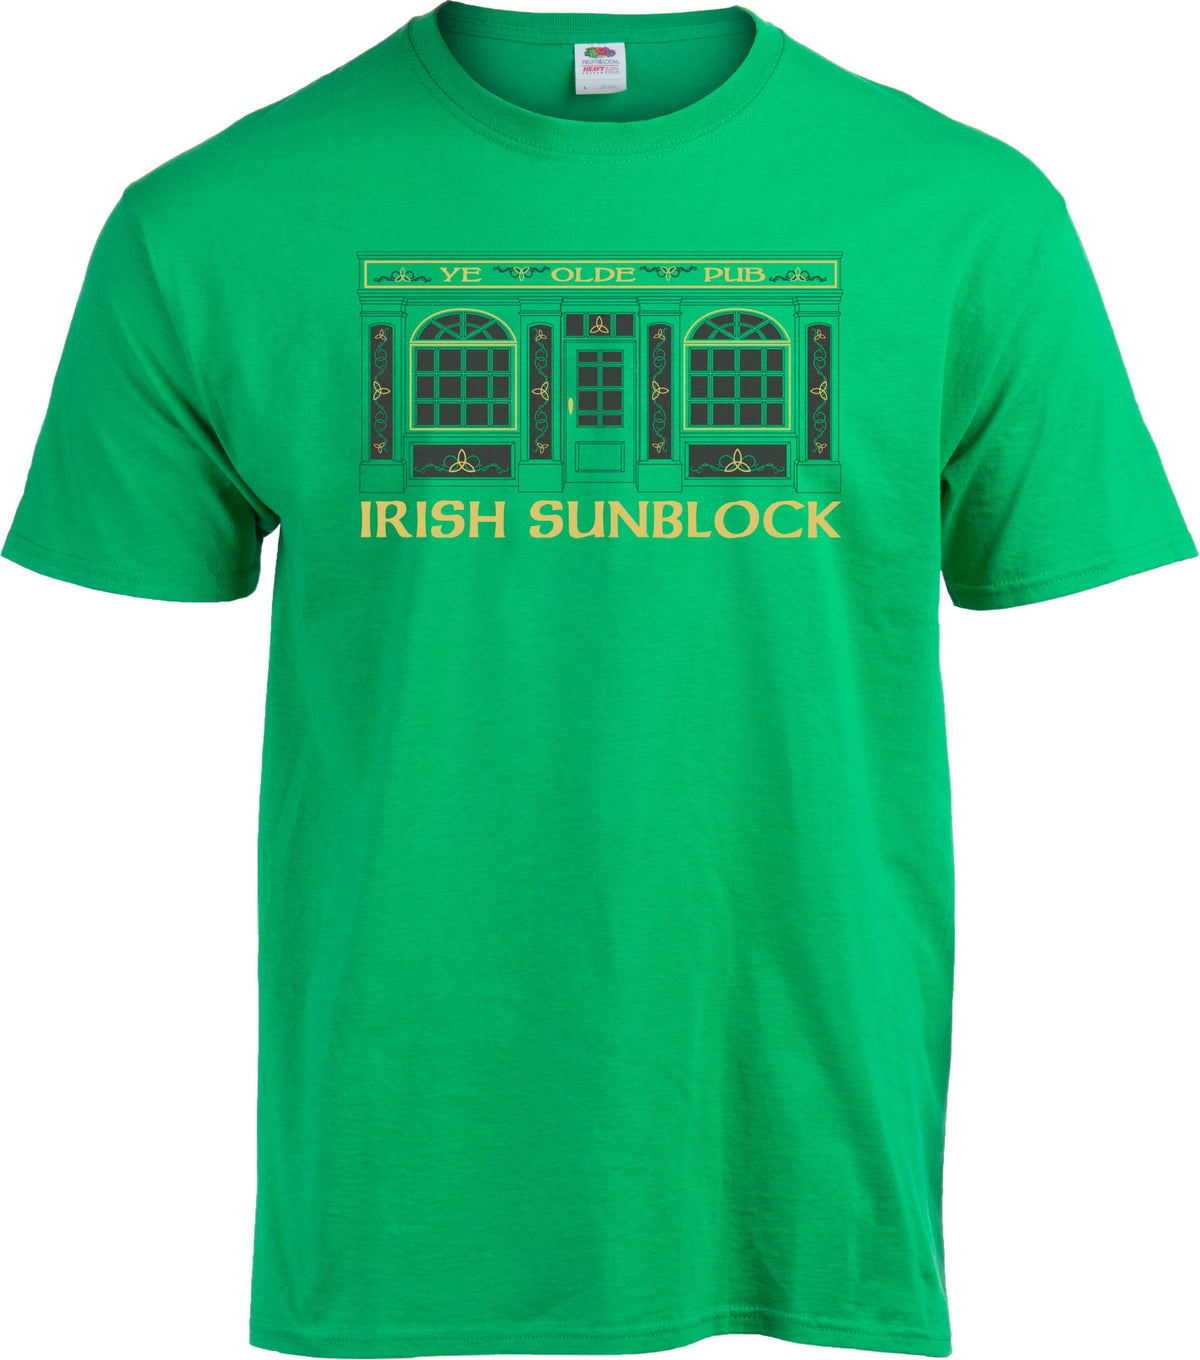 Irish Sunblock - St. Patrick's Day Funny Pub Drinking Party T-shirt - Women's